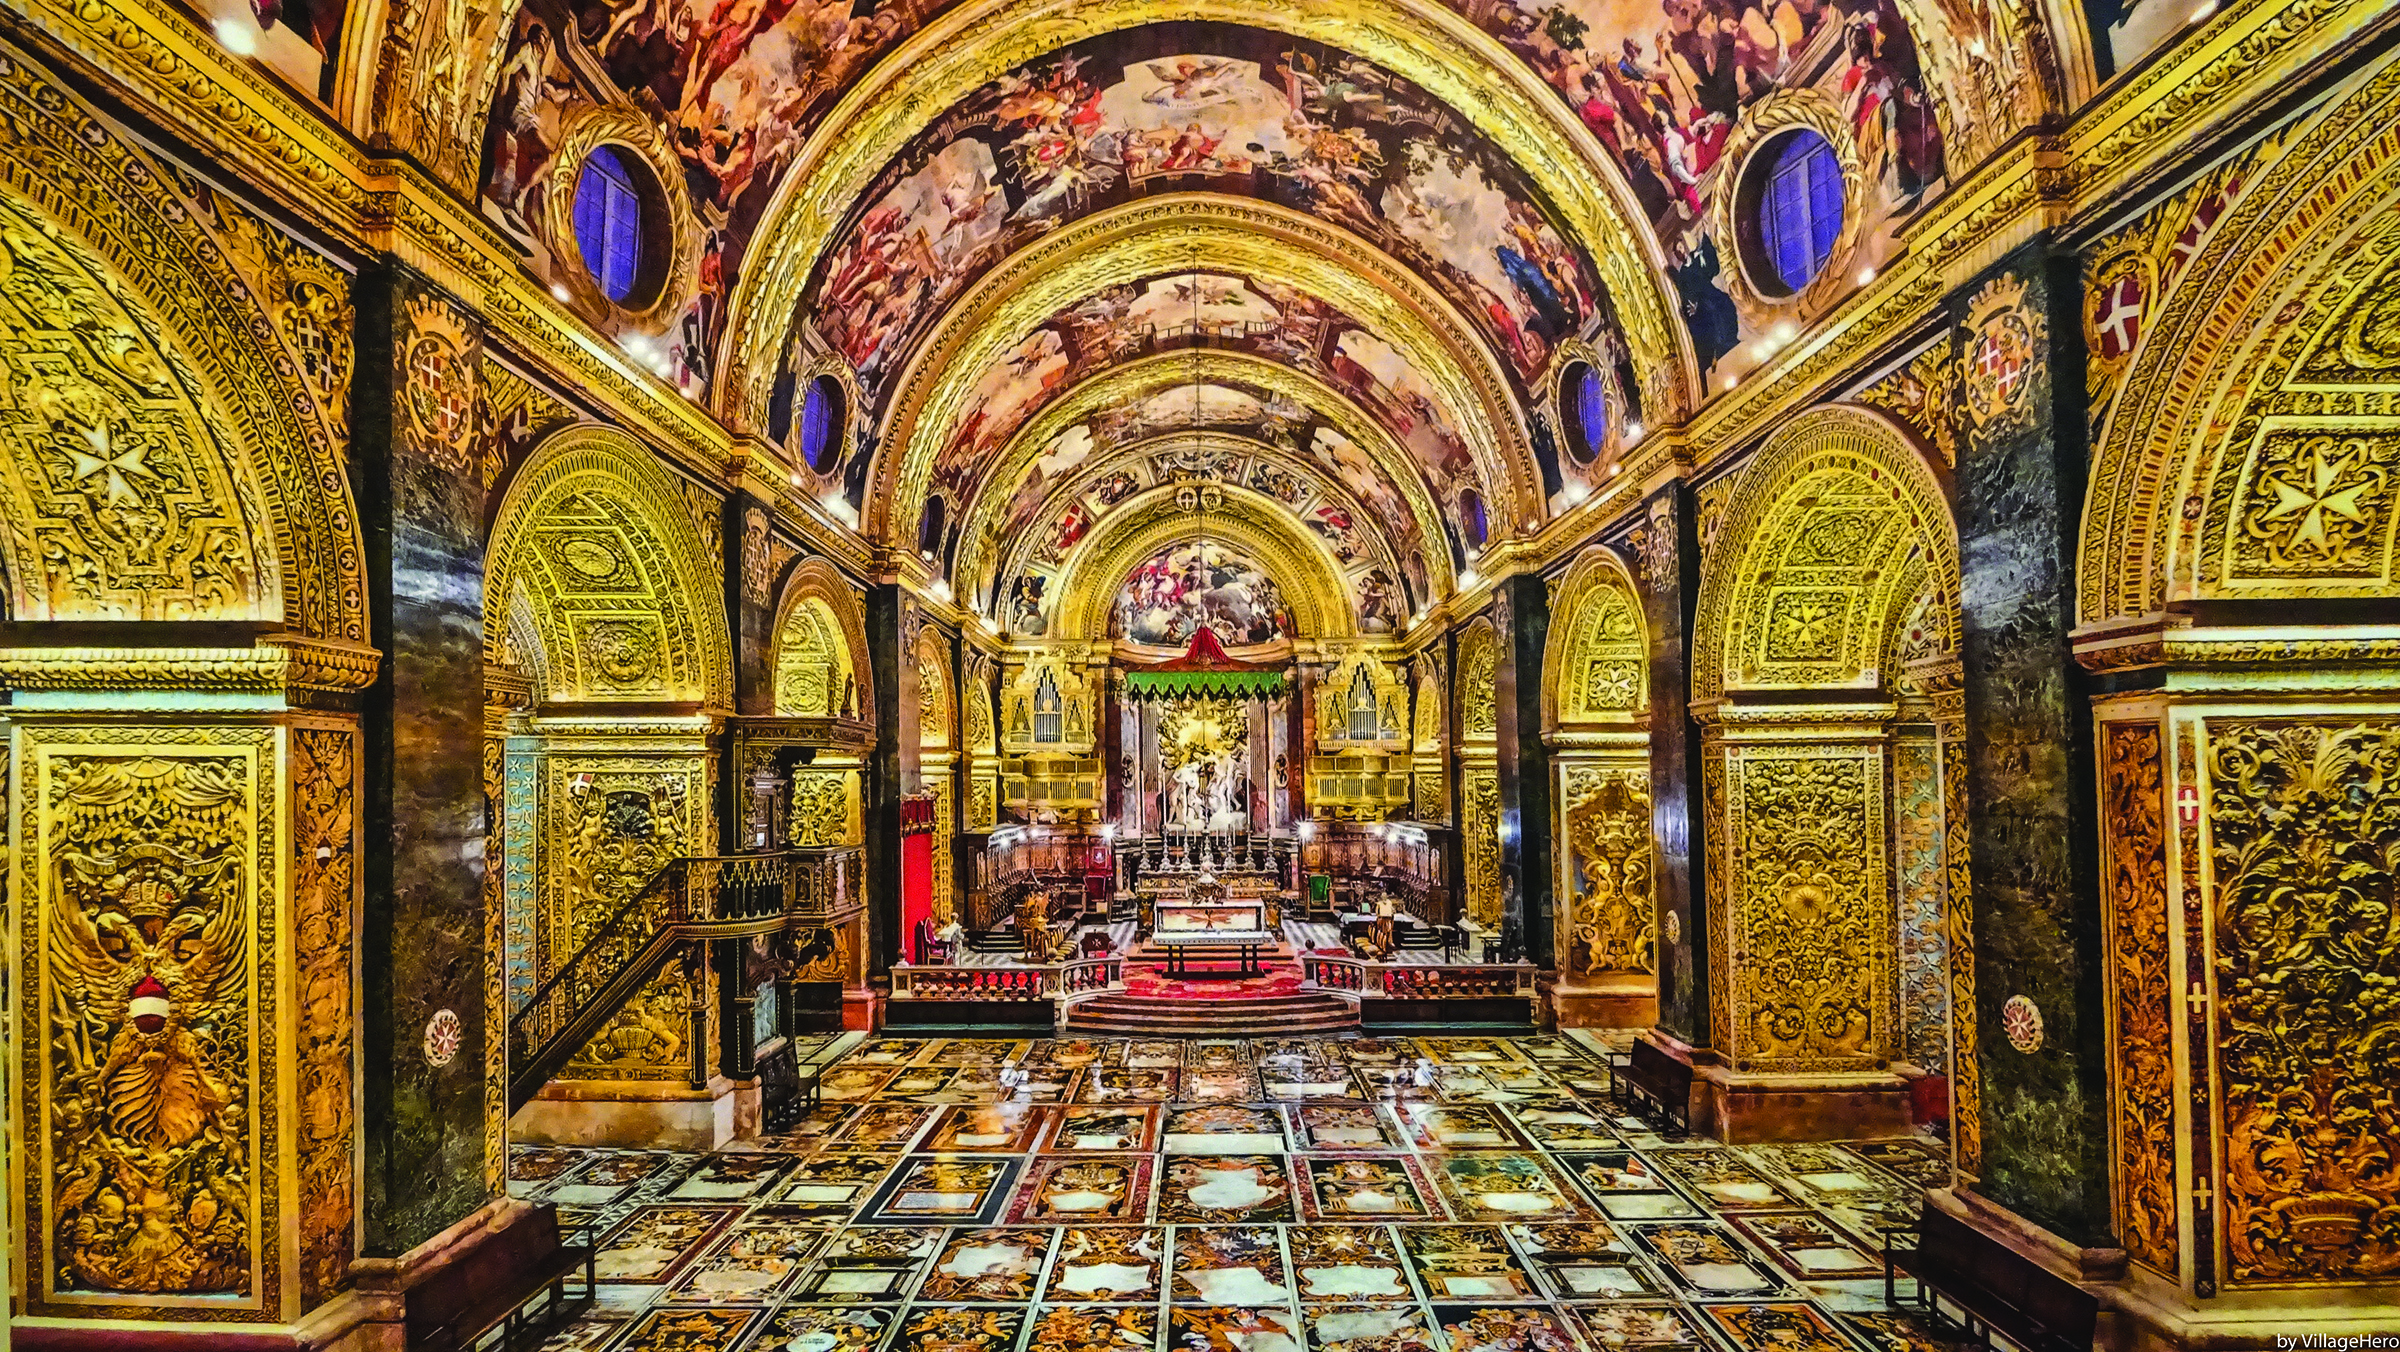 St John's Co-Cathedral in Valletta, Malta